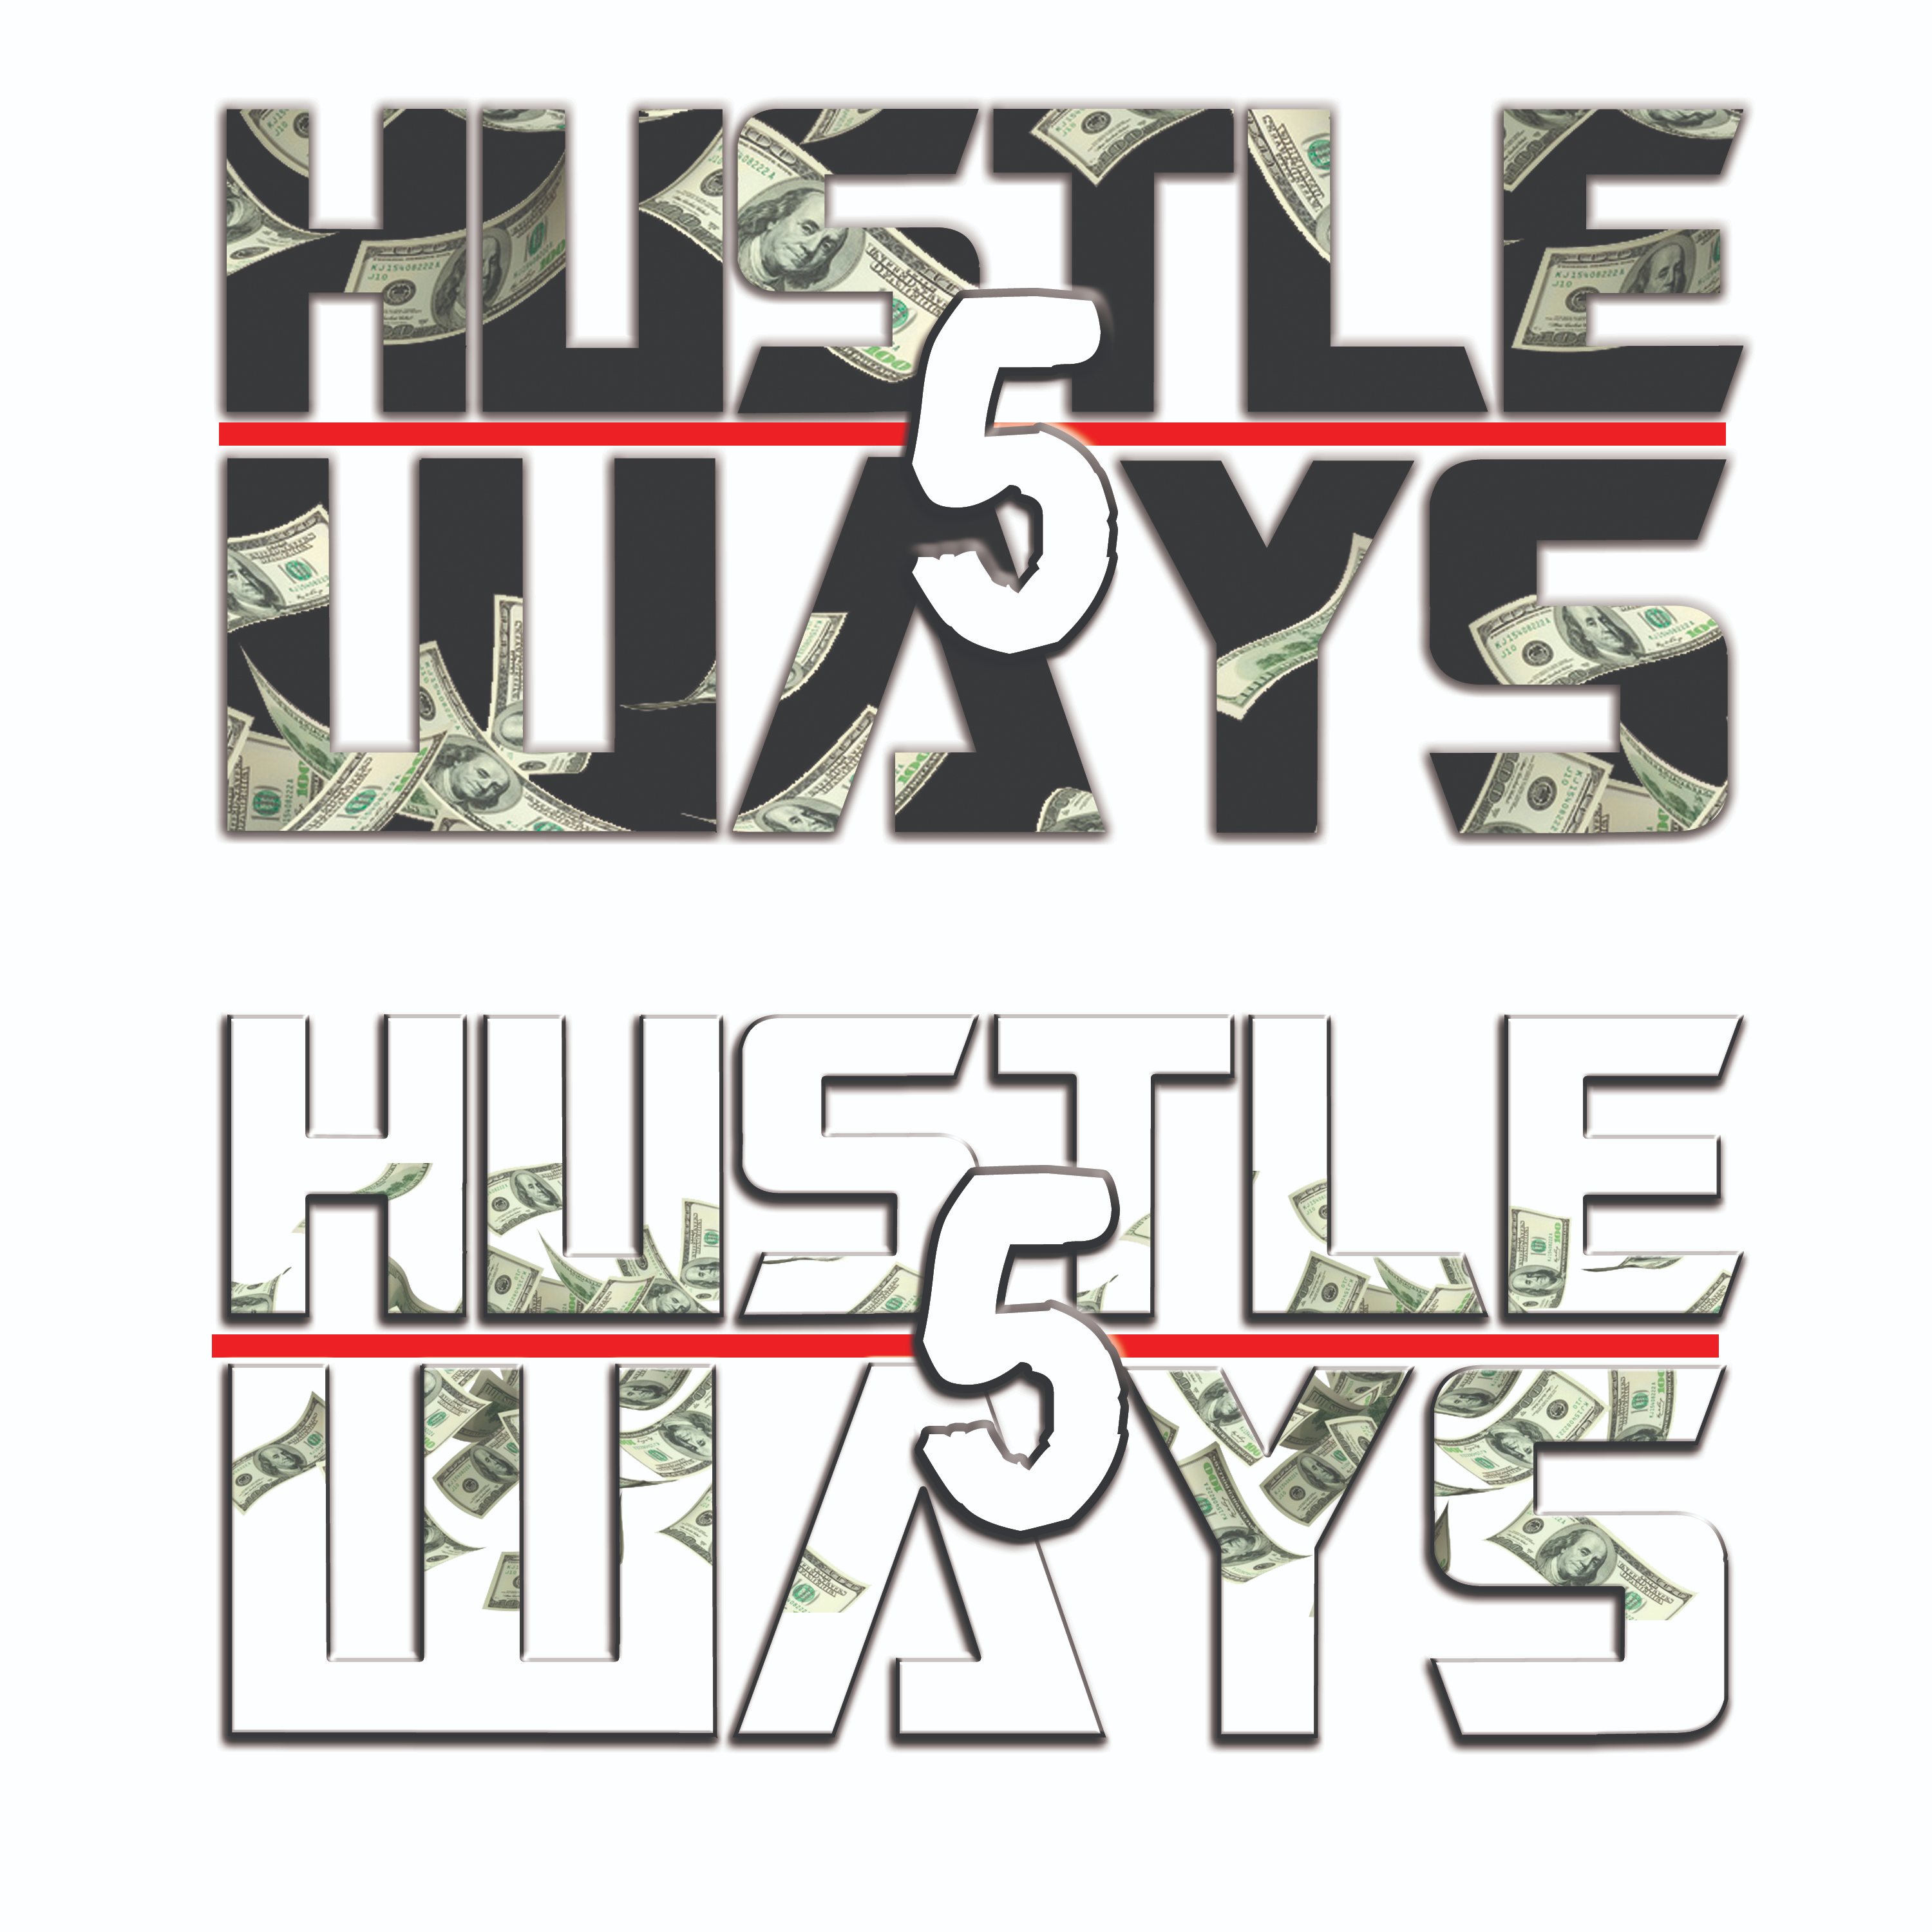 hustle5ways